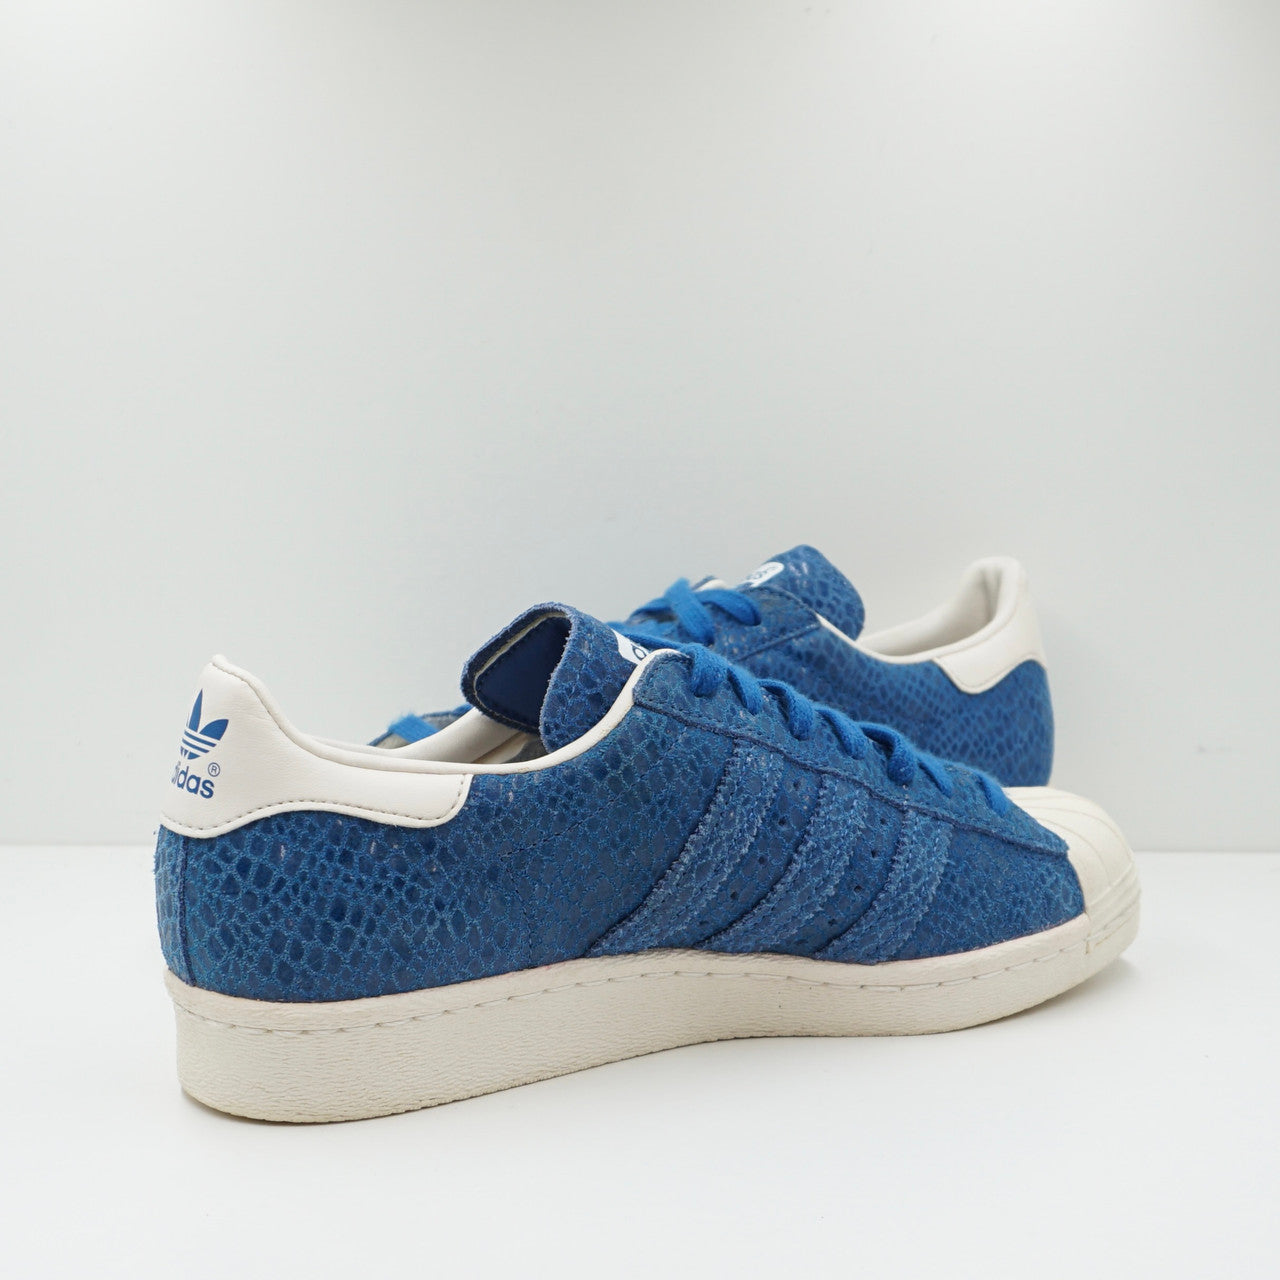 Adidas Superstar 80s Surf Blue (W)